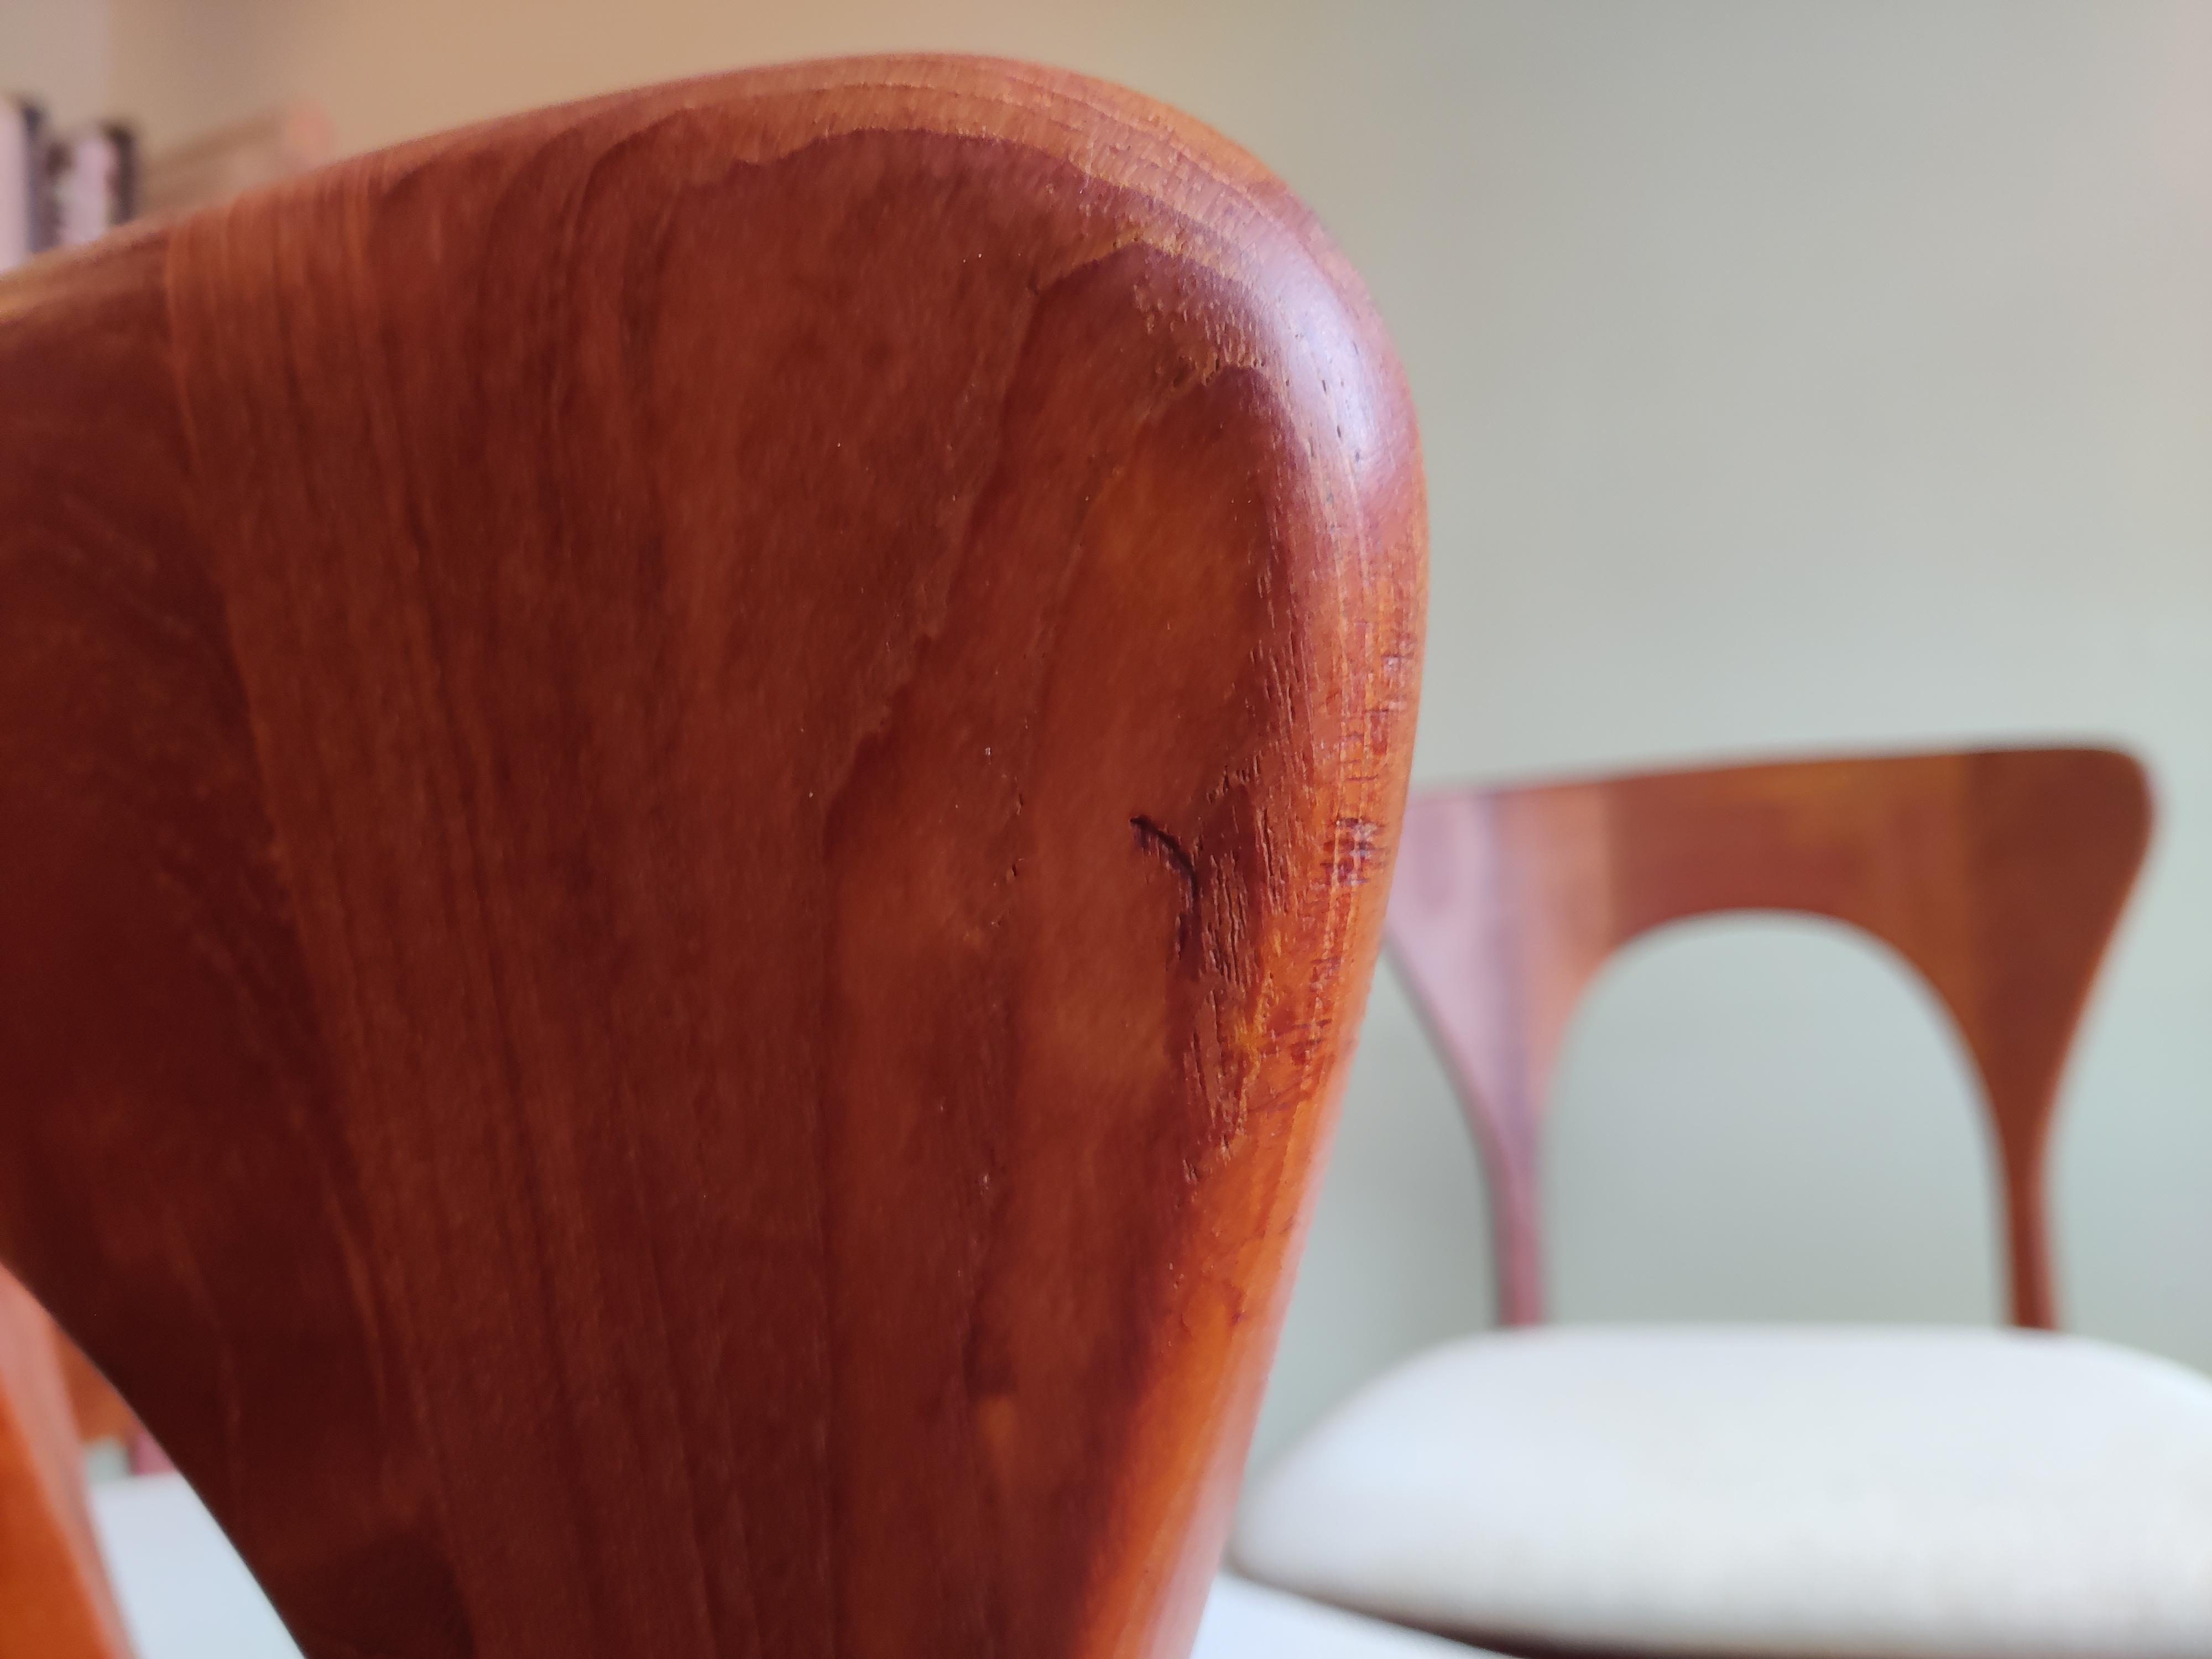 Danish dining chairs 